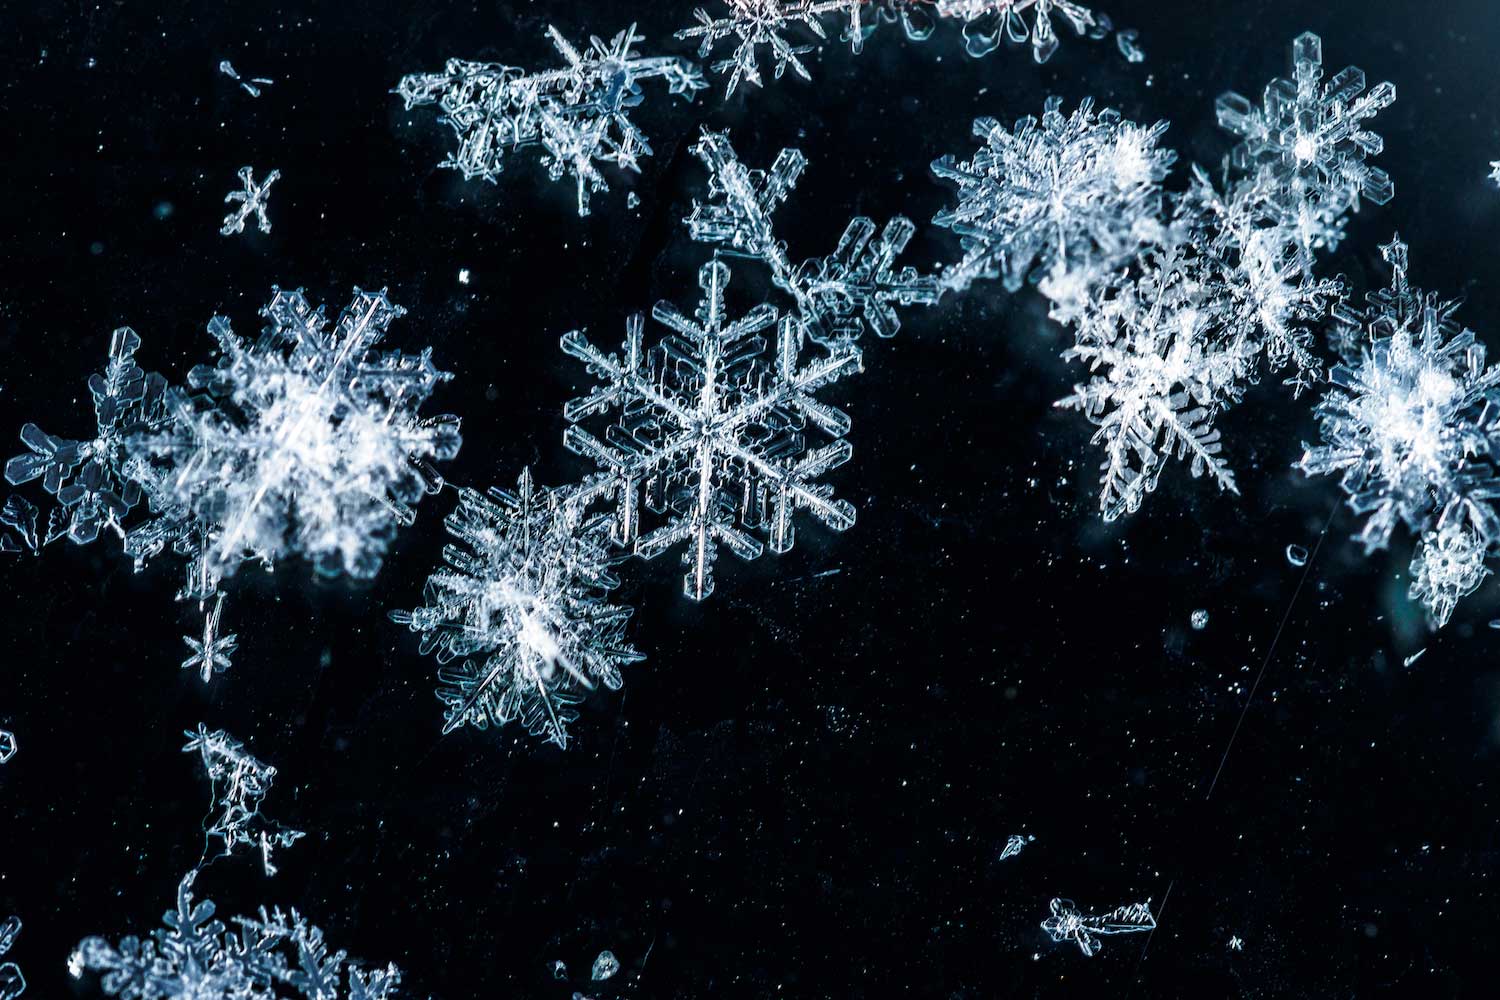 Snowflake crystals on a dark background.